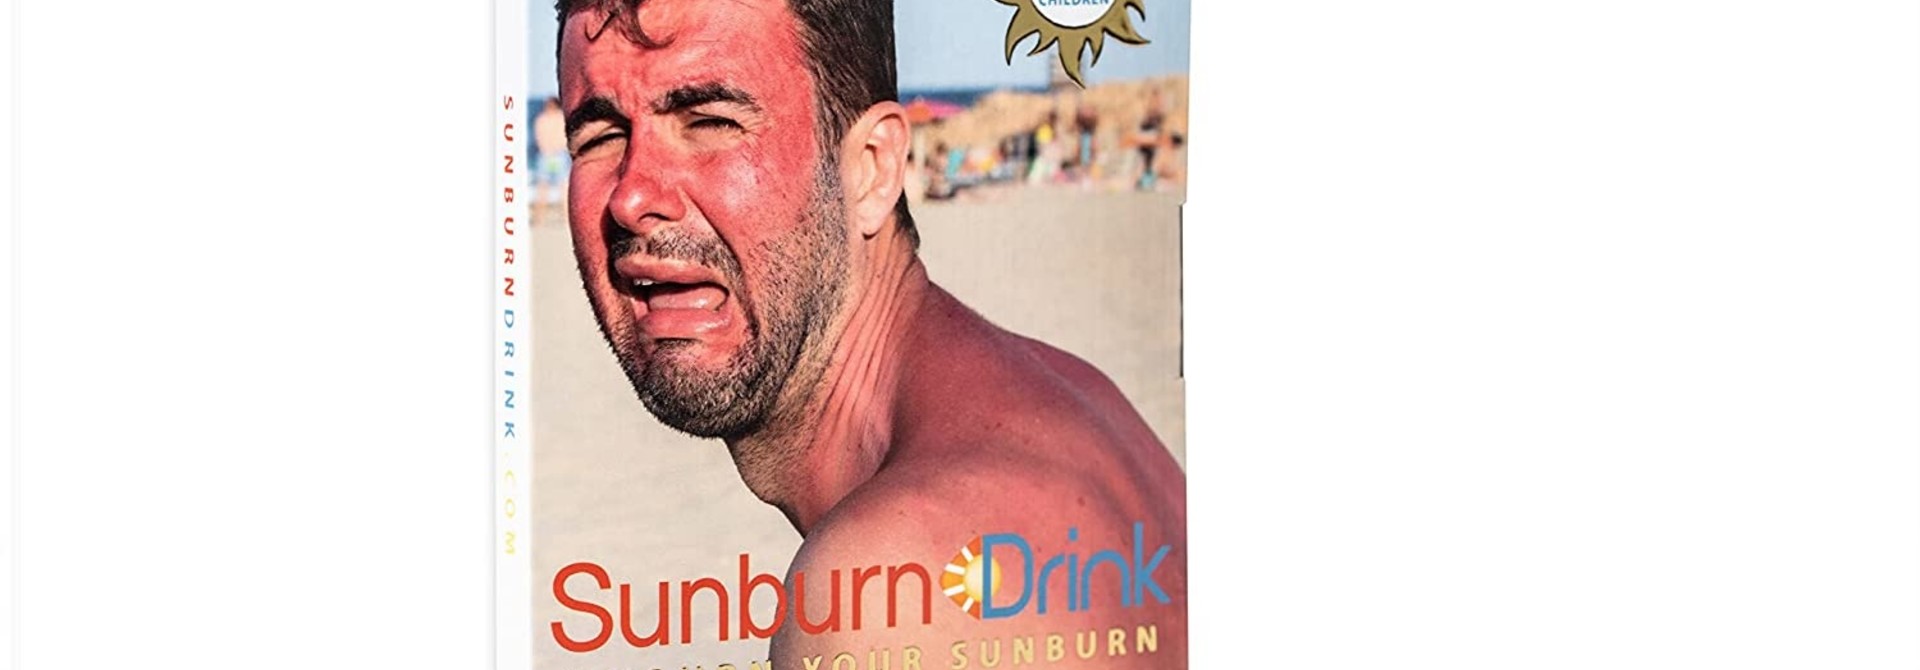 Sunburn Drink - 2 Day Packets